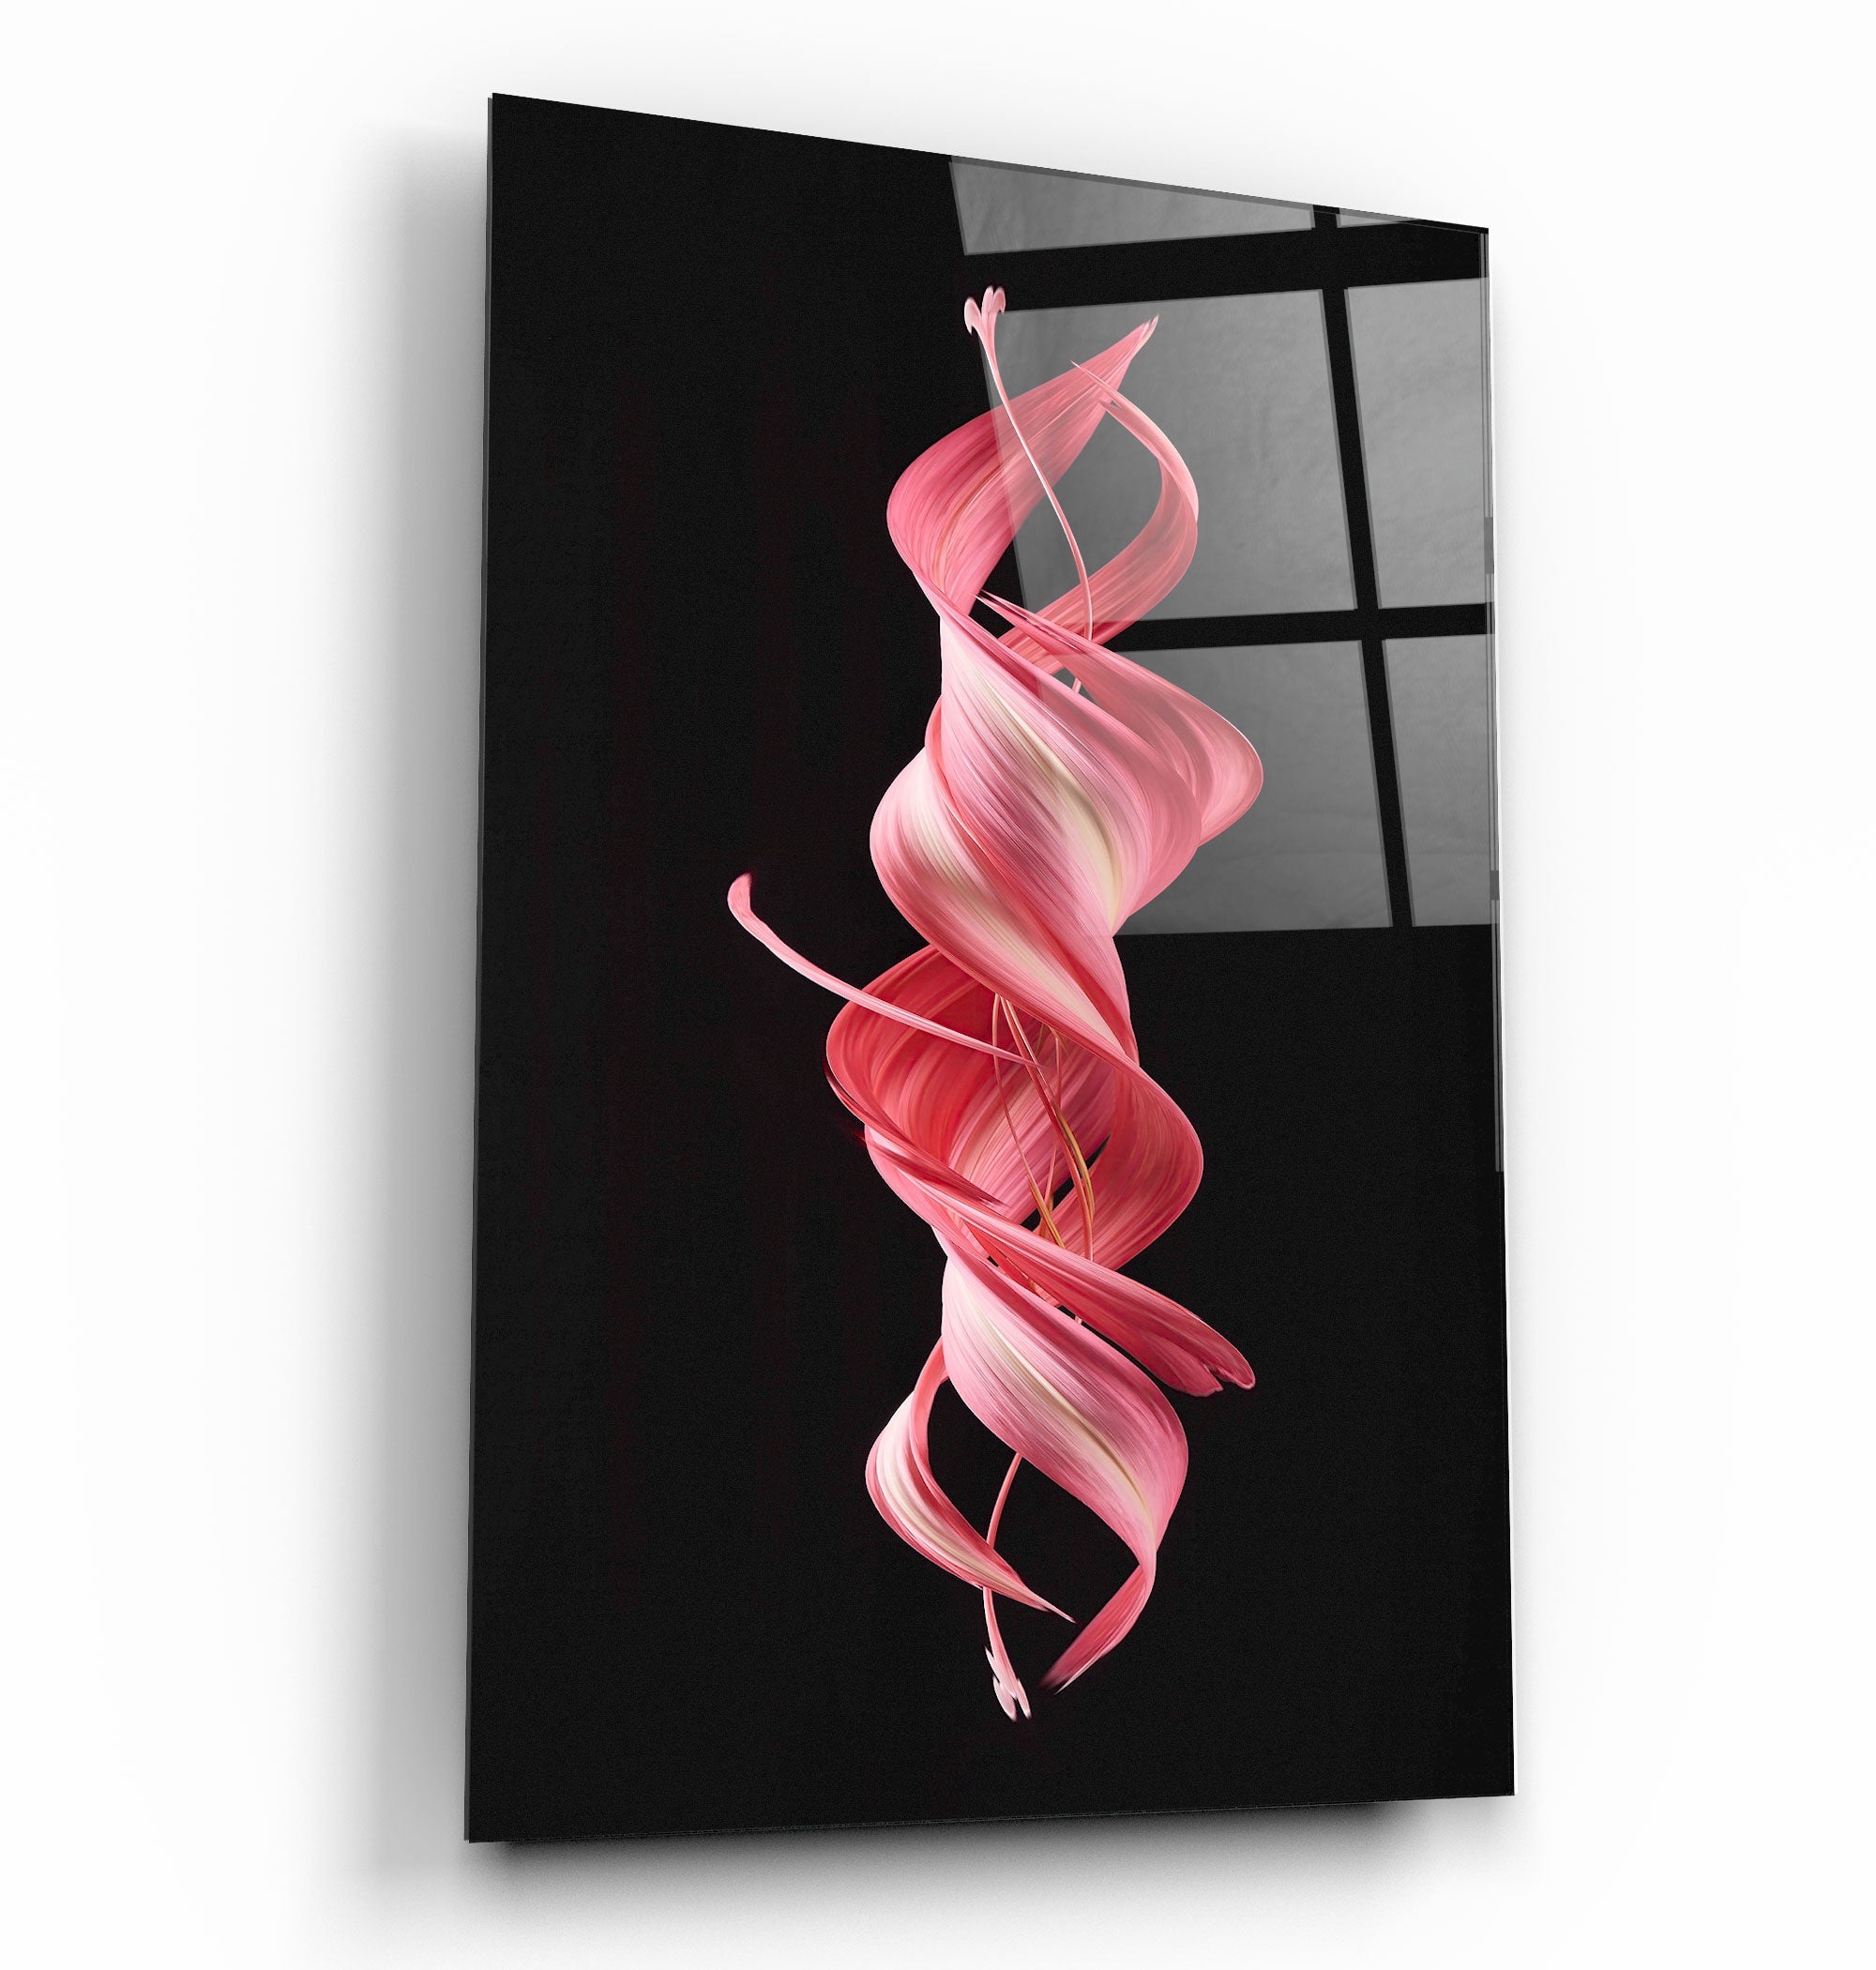 ・"Twisted"・Art mural en verre de la collection du designer